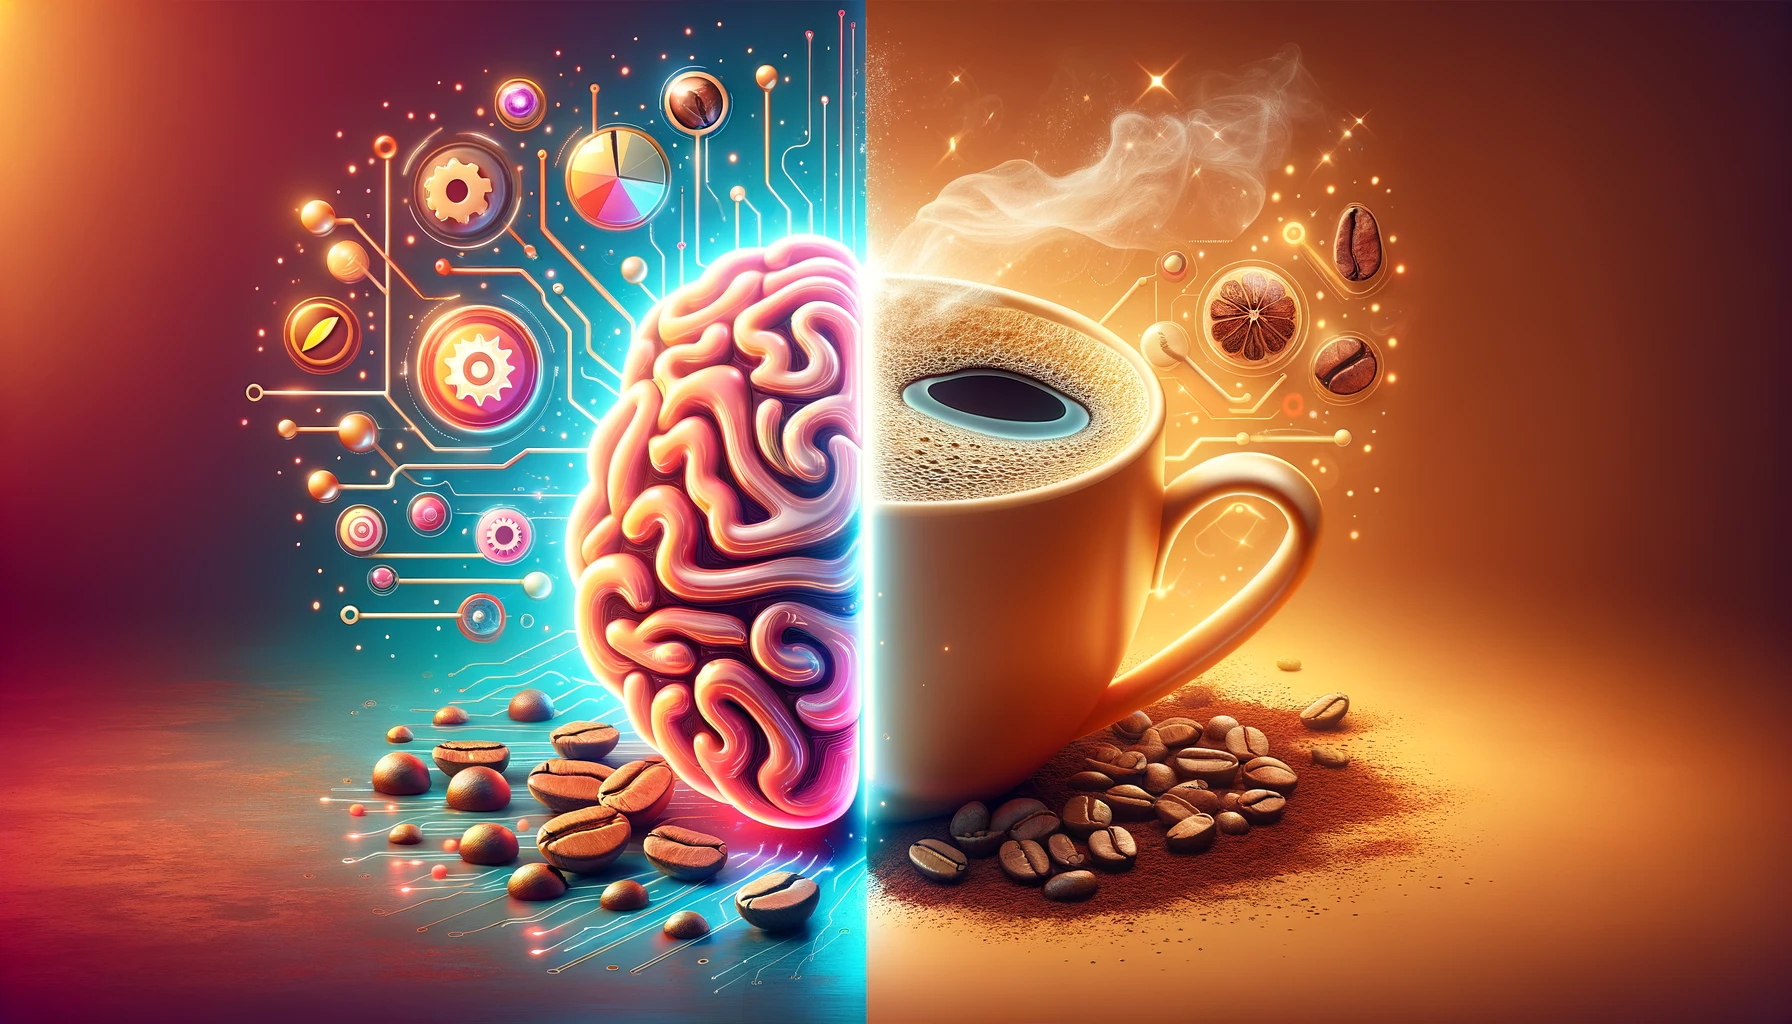 An image comparing nootropic coffee versus regular coffee